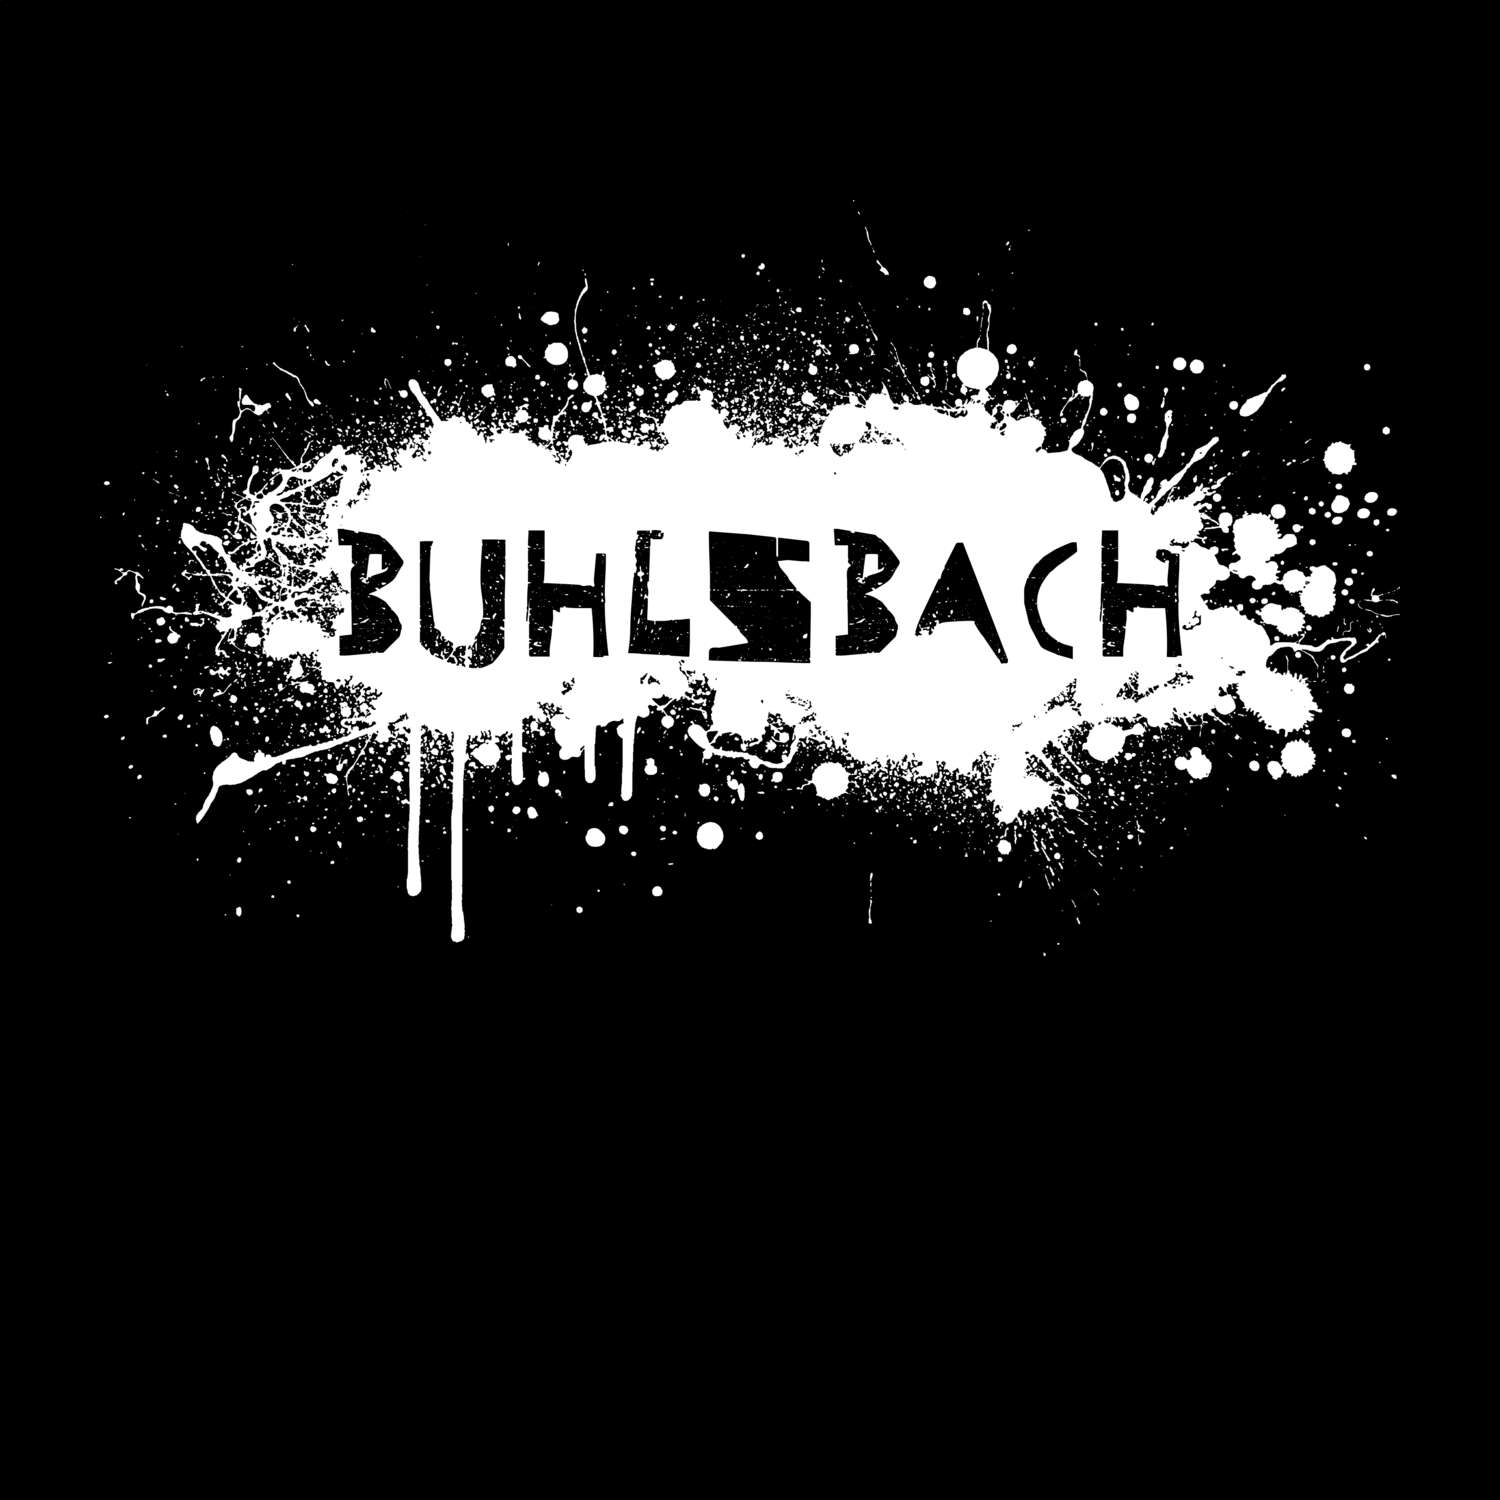 Buhlsbach T-Shirt »Paint Splash Punk«